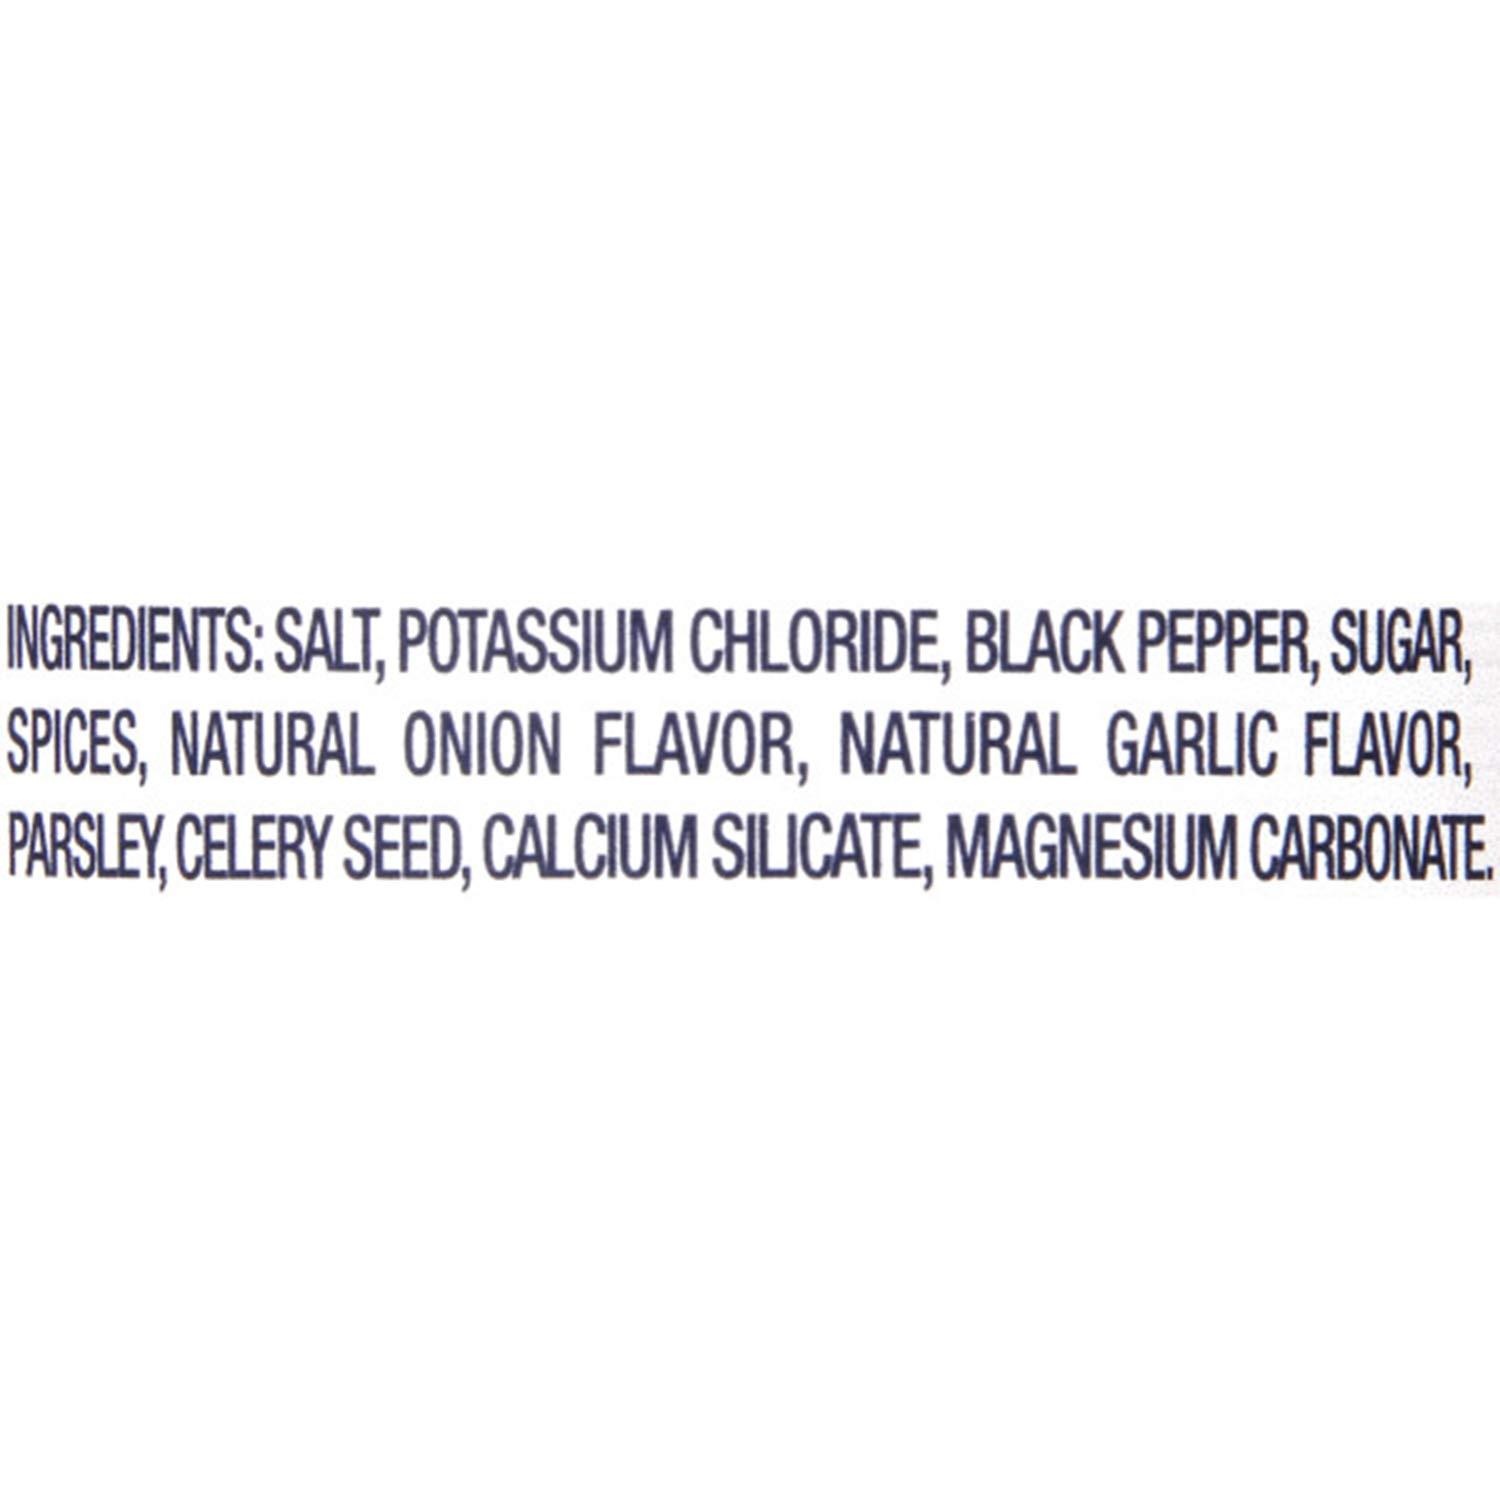 4 pack) Morton Salt Nature's Seasons Seasoning Blend - Savory, 7.5